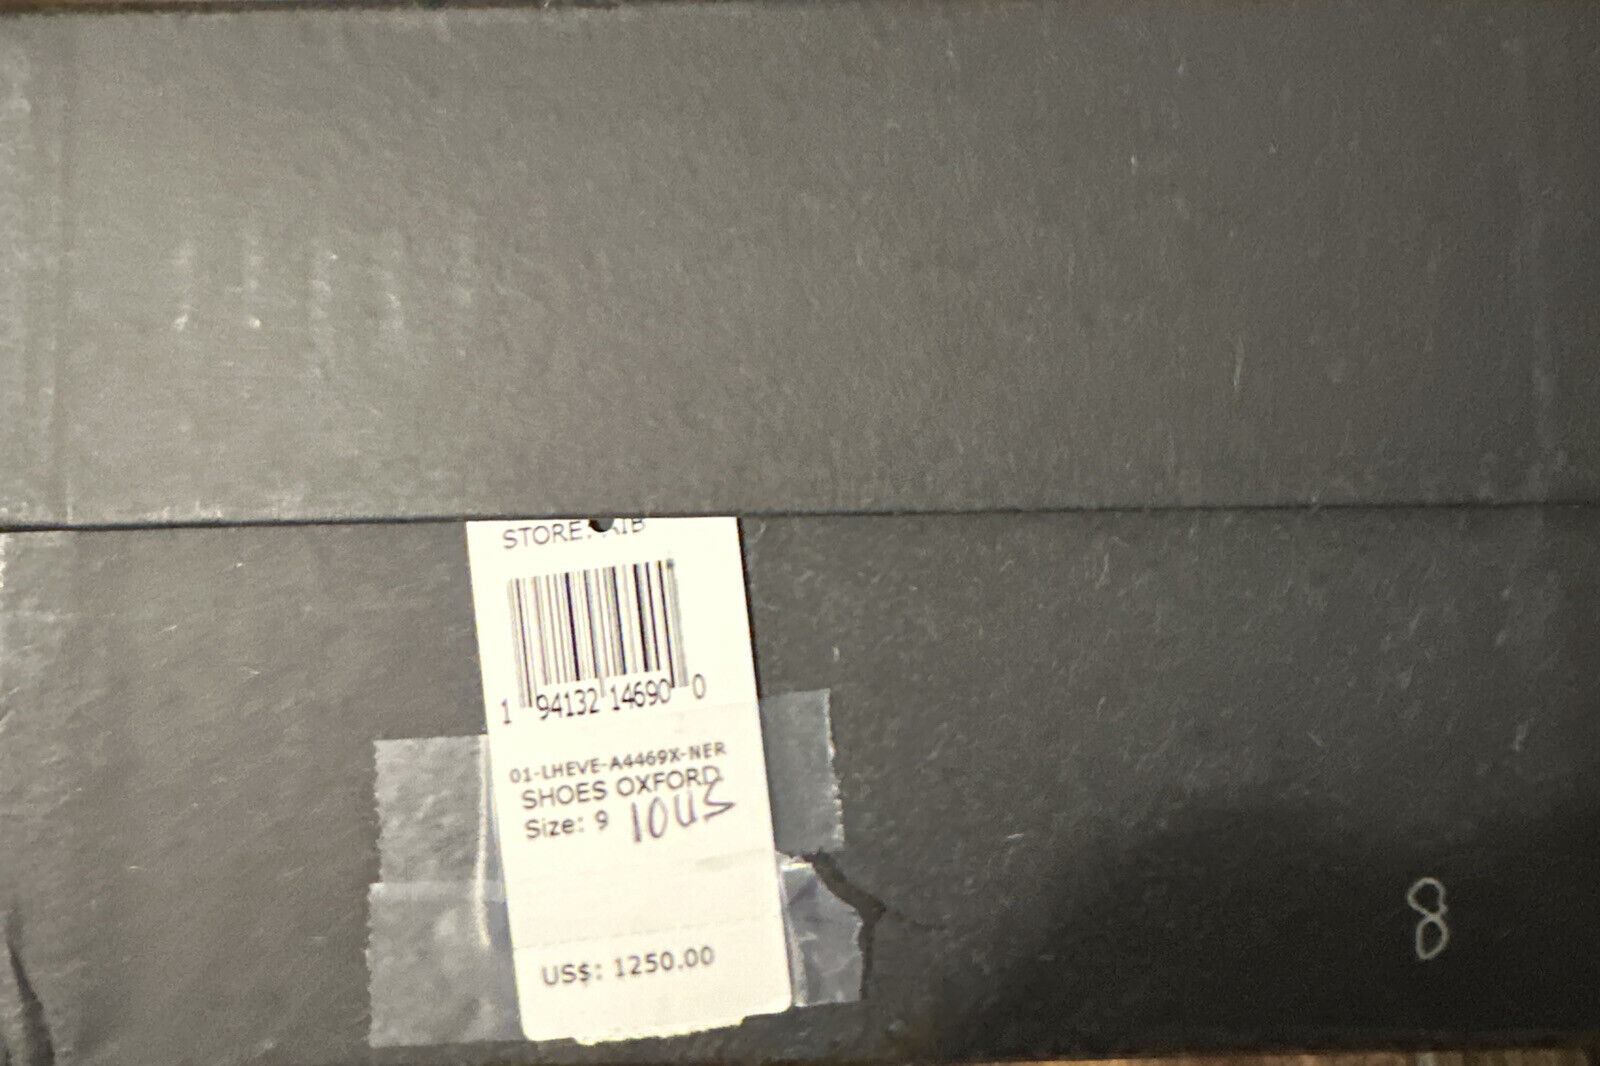 New $1250 Ermenegildo Zegna Couture Oxford Leather Shoes Black 10 US Italy